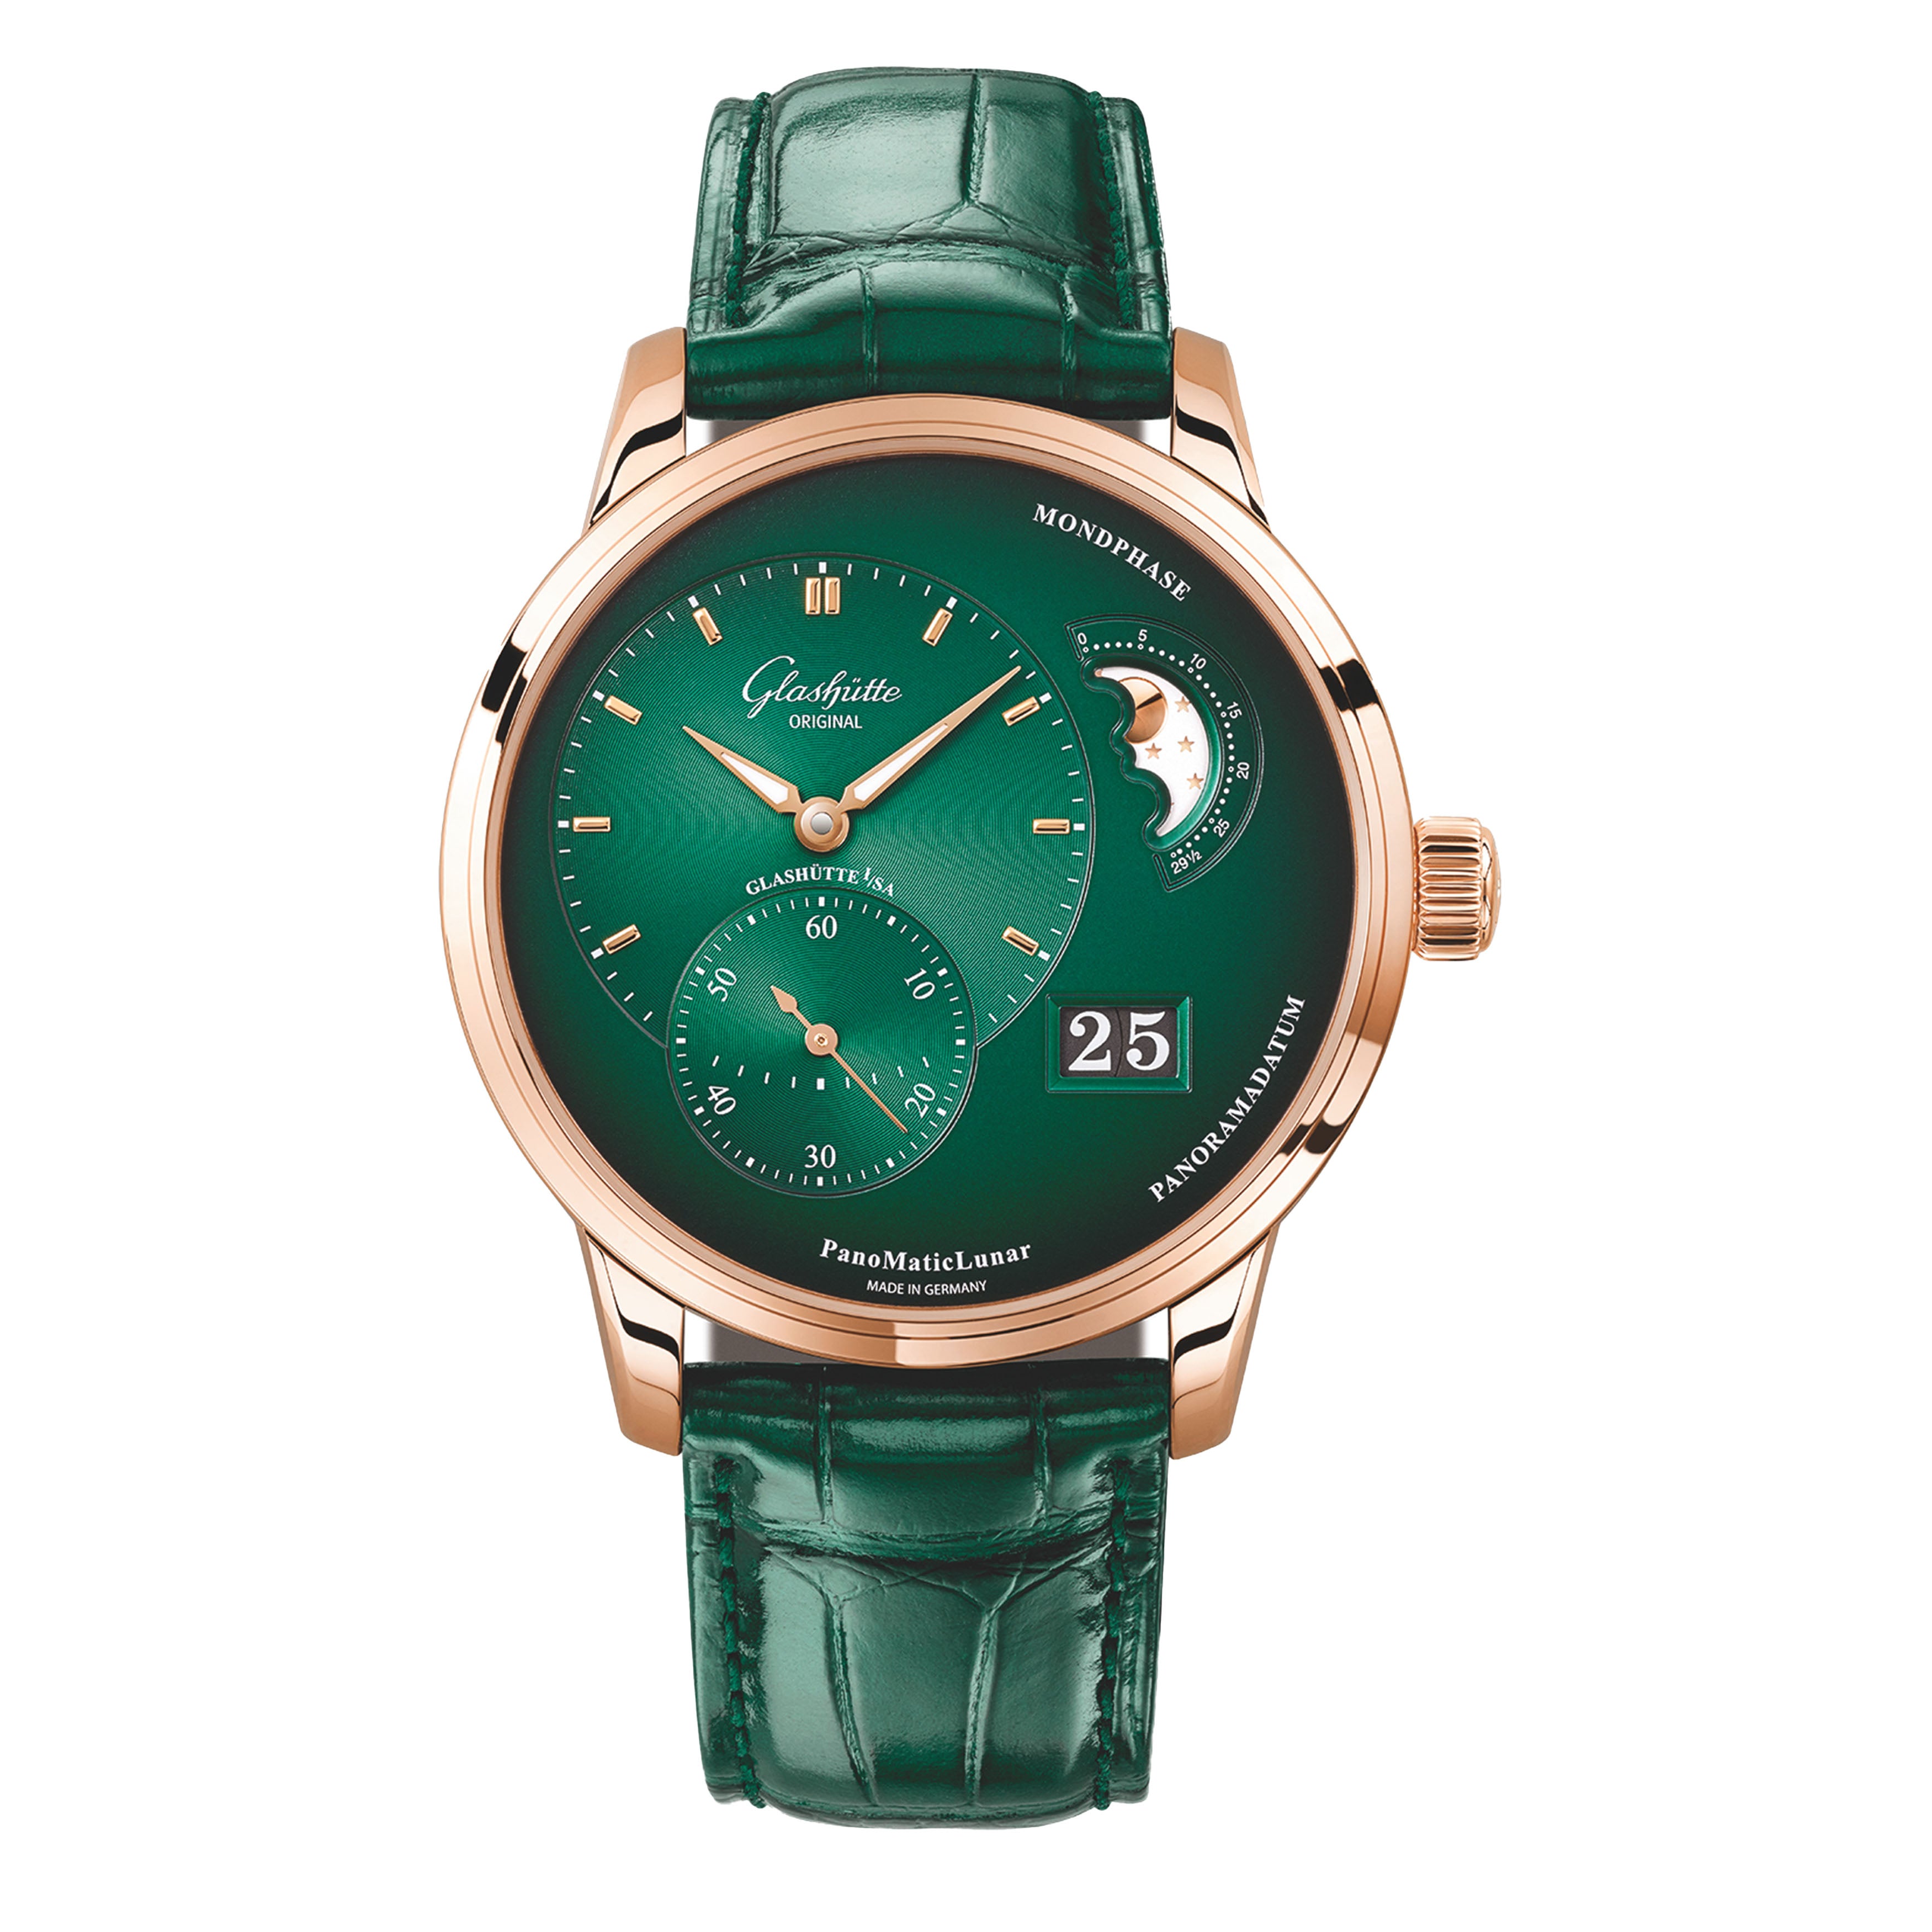 Glashutte Original PanoMatciLunar Watch, 40mm Green Dial, 1-90-02-23-35-61